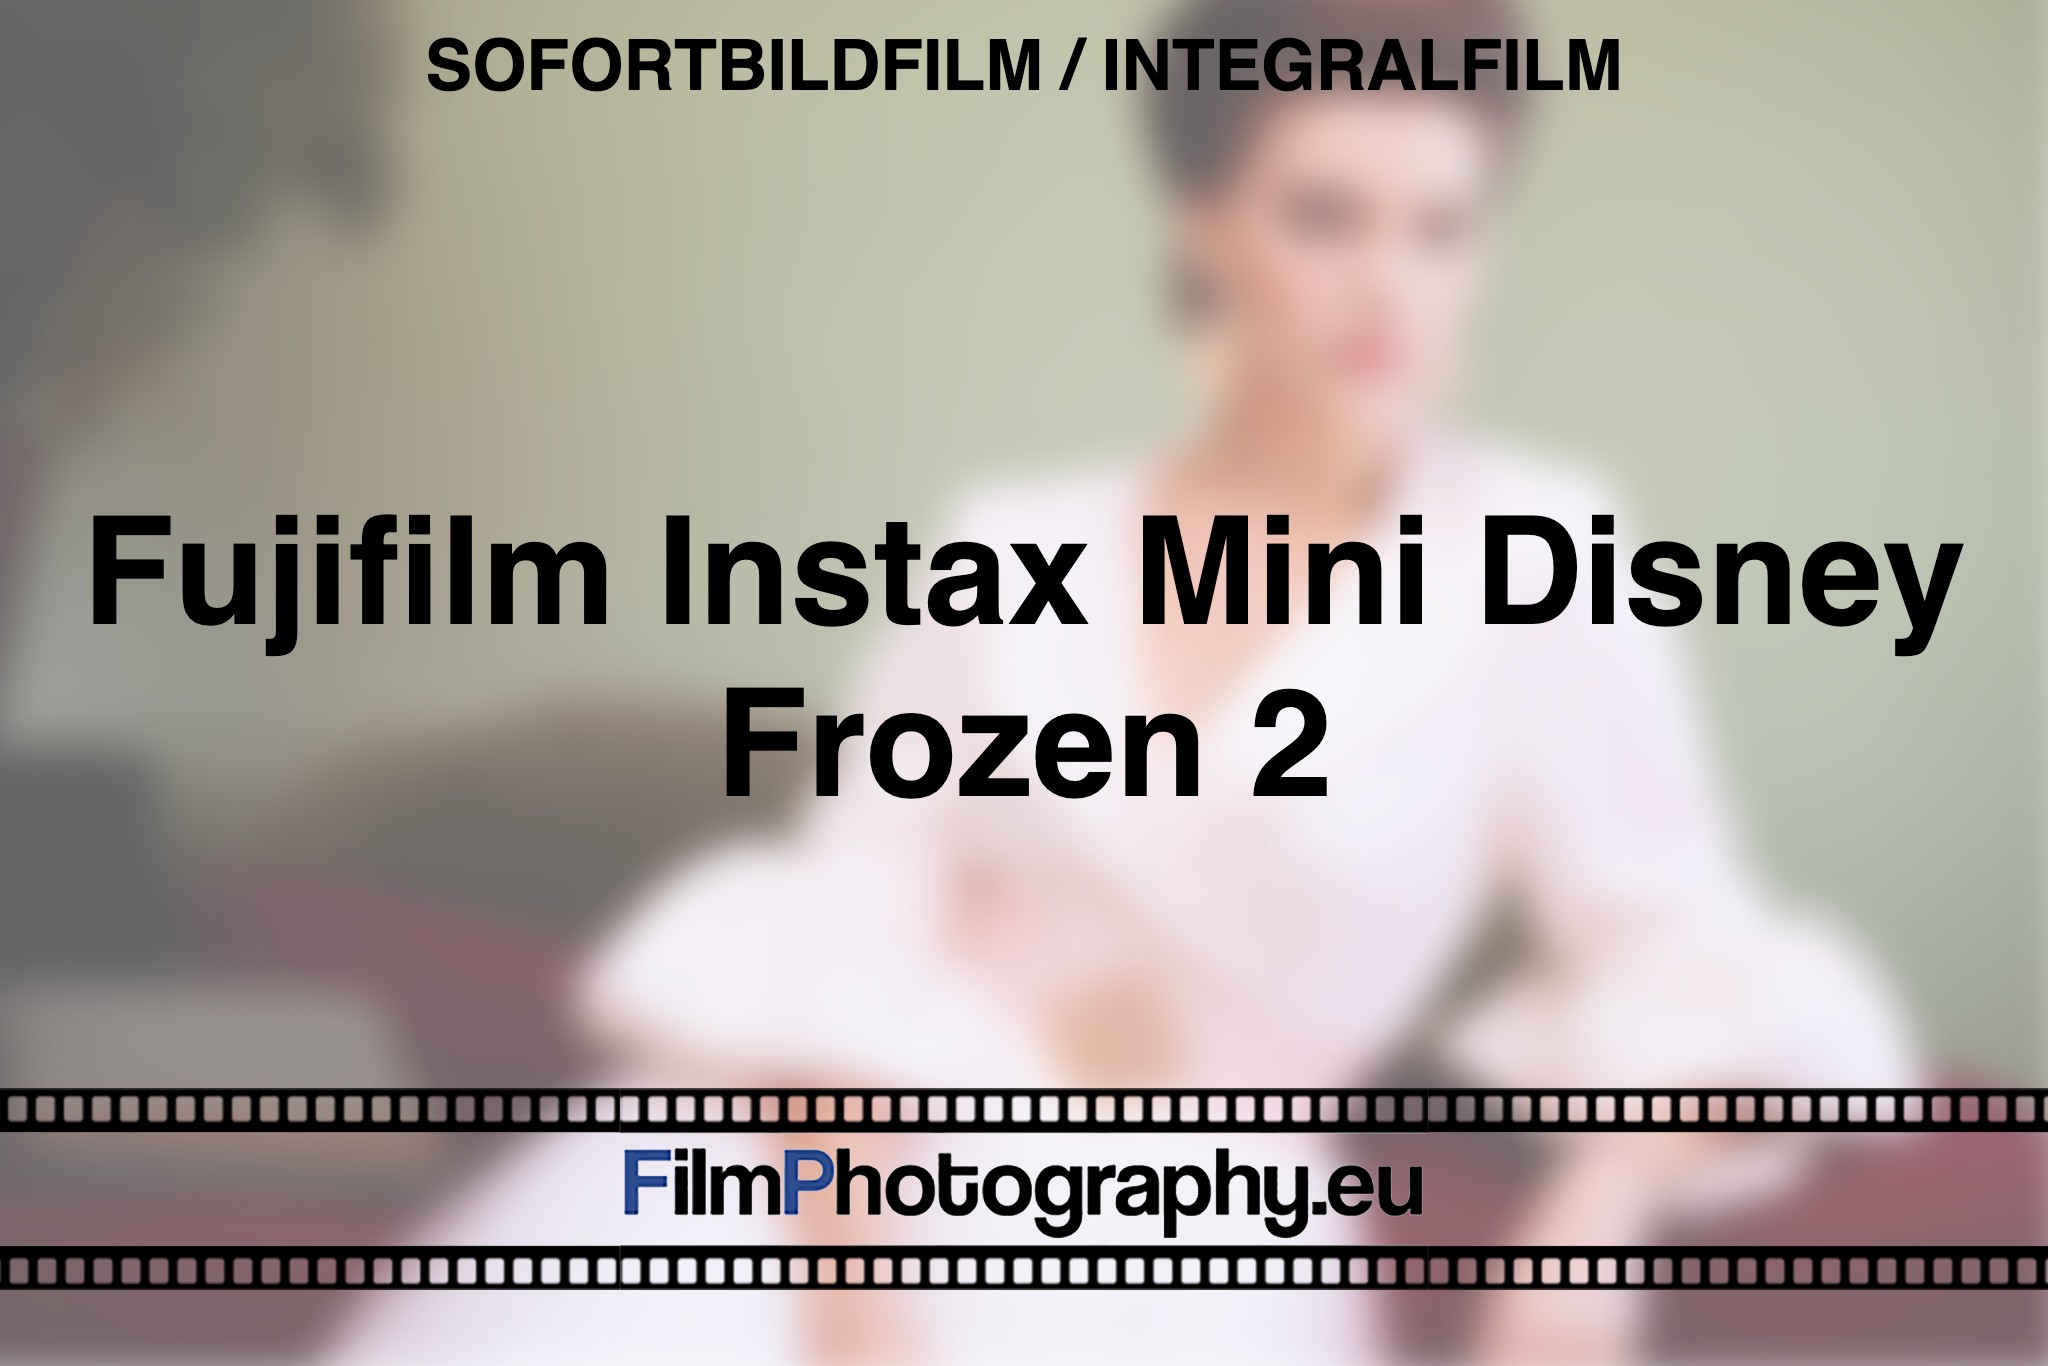 fujifilm-instax-mini-disney-frozen-2-sofortbildfilm-integralfilm-fp-bnv